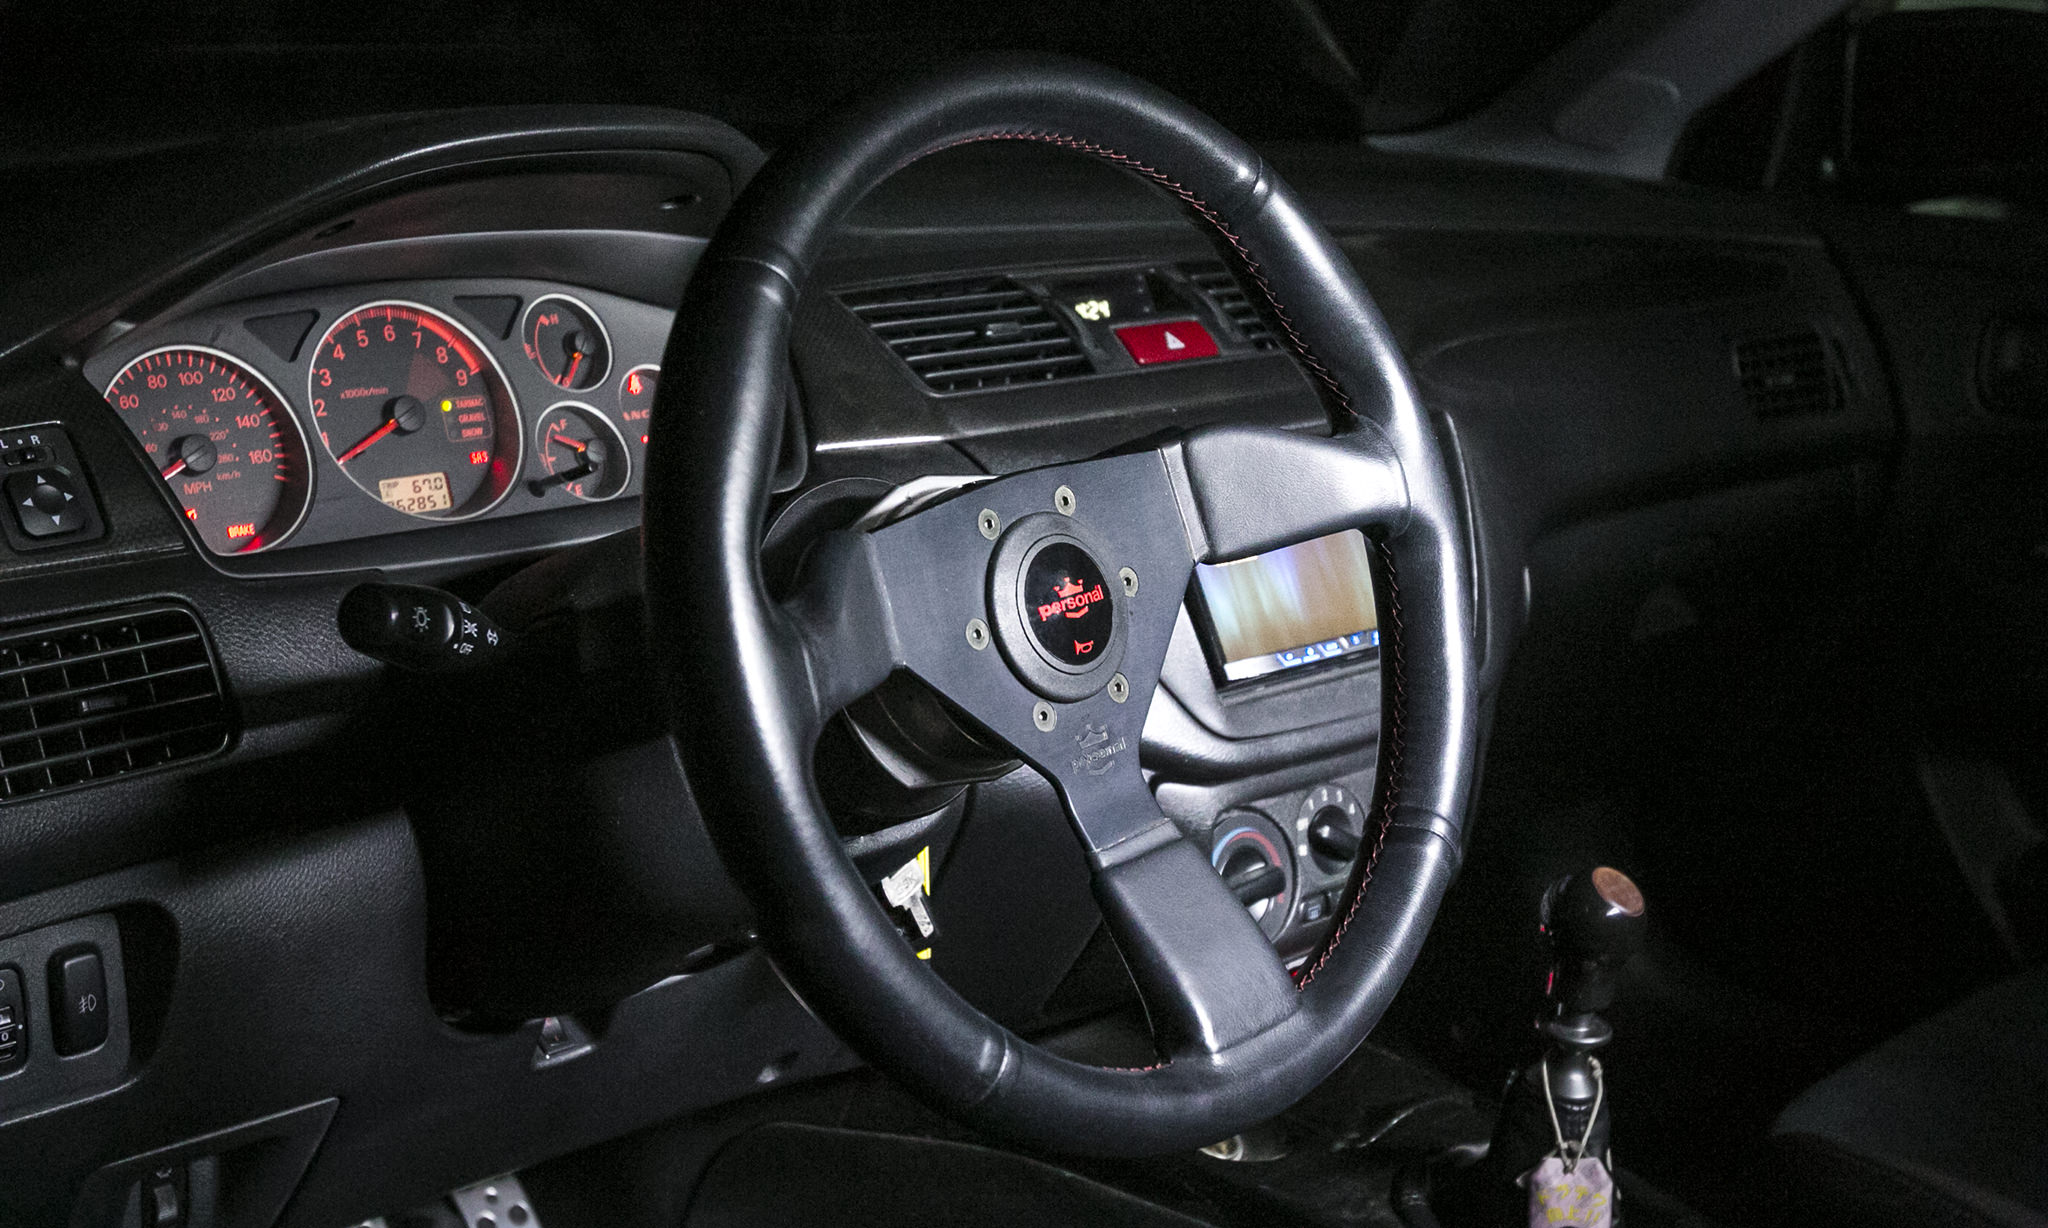 Steering wheel repair kit Black leather Upholstery Full Set Renovation +  Cleaner